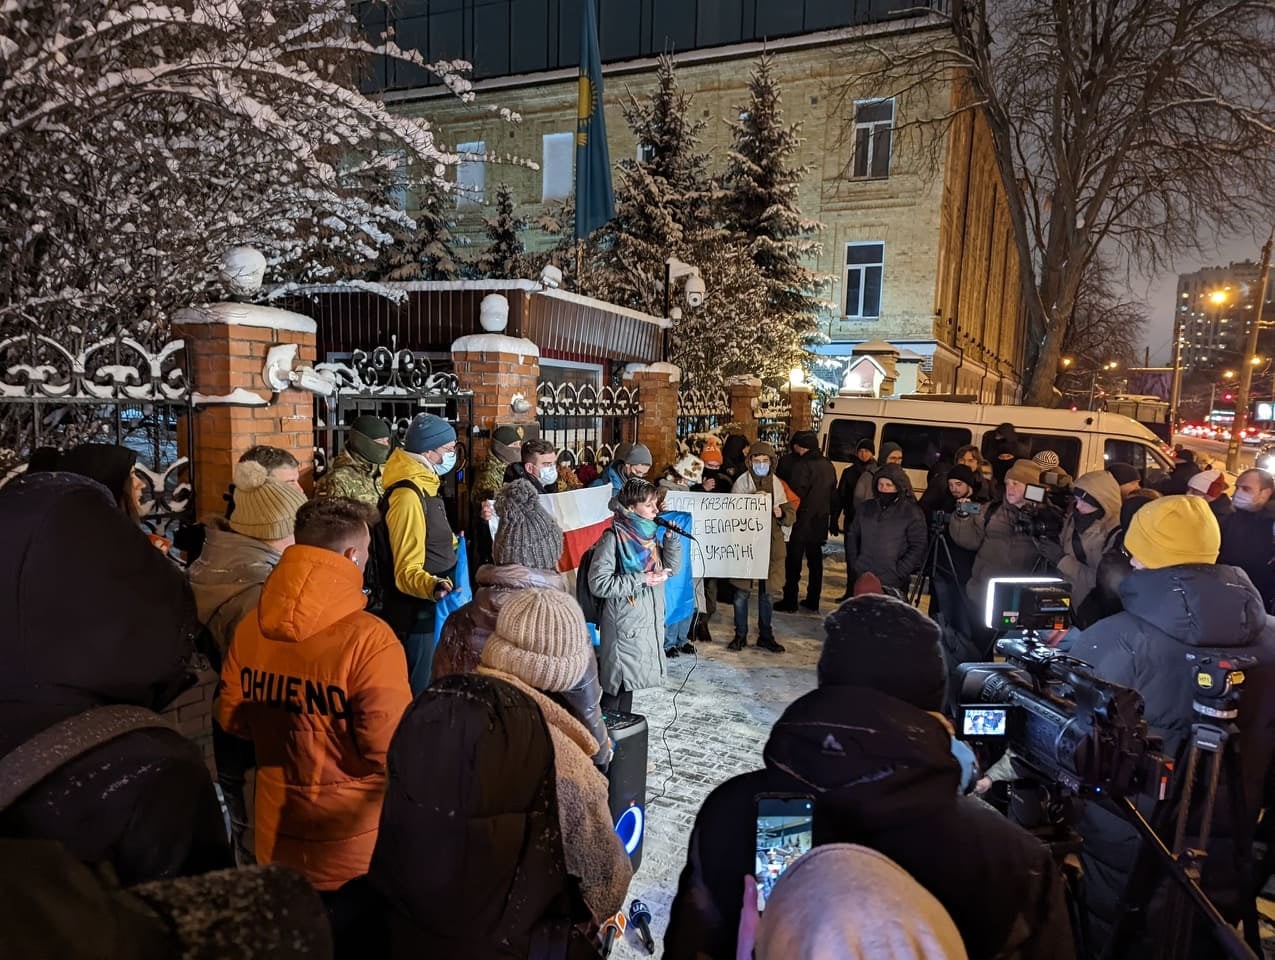 V Kieve Proveli Akciju Solidarnosti S Protestujushhimi Kazahstana 4e0b1c9